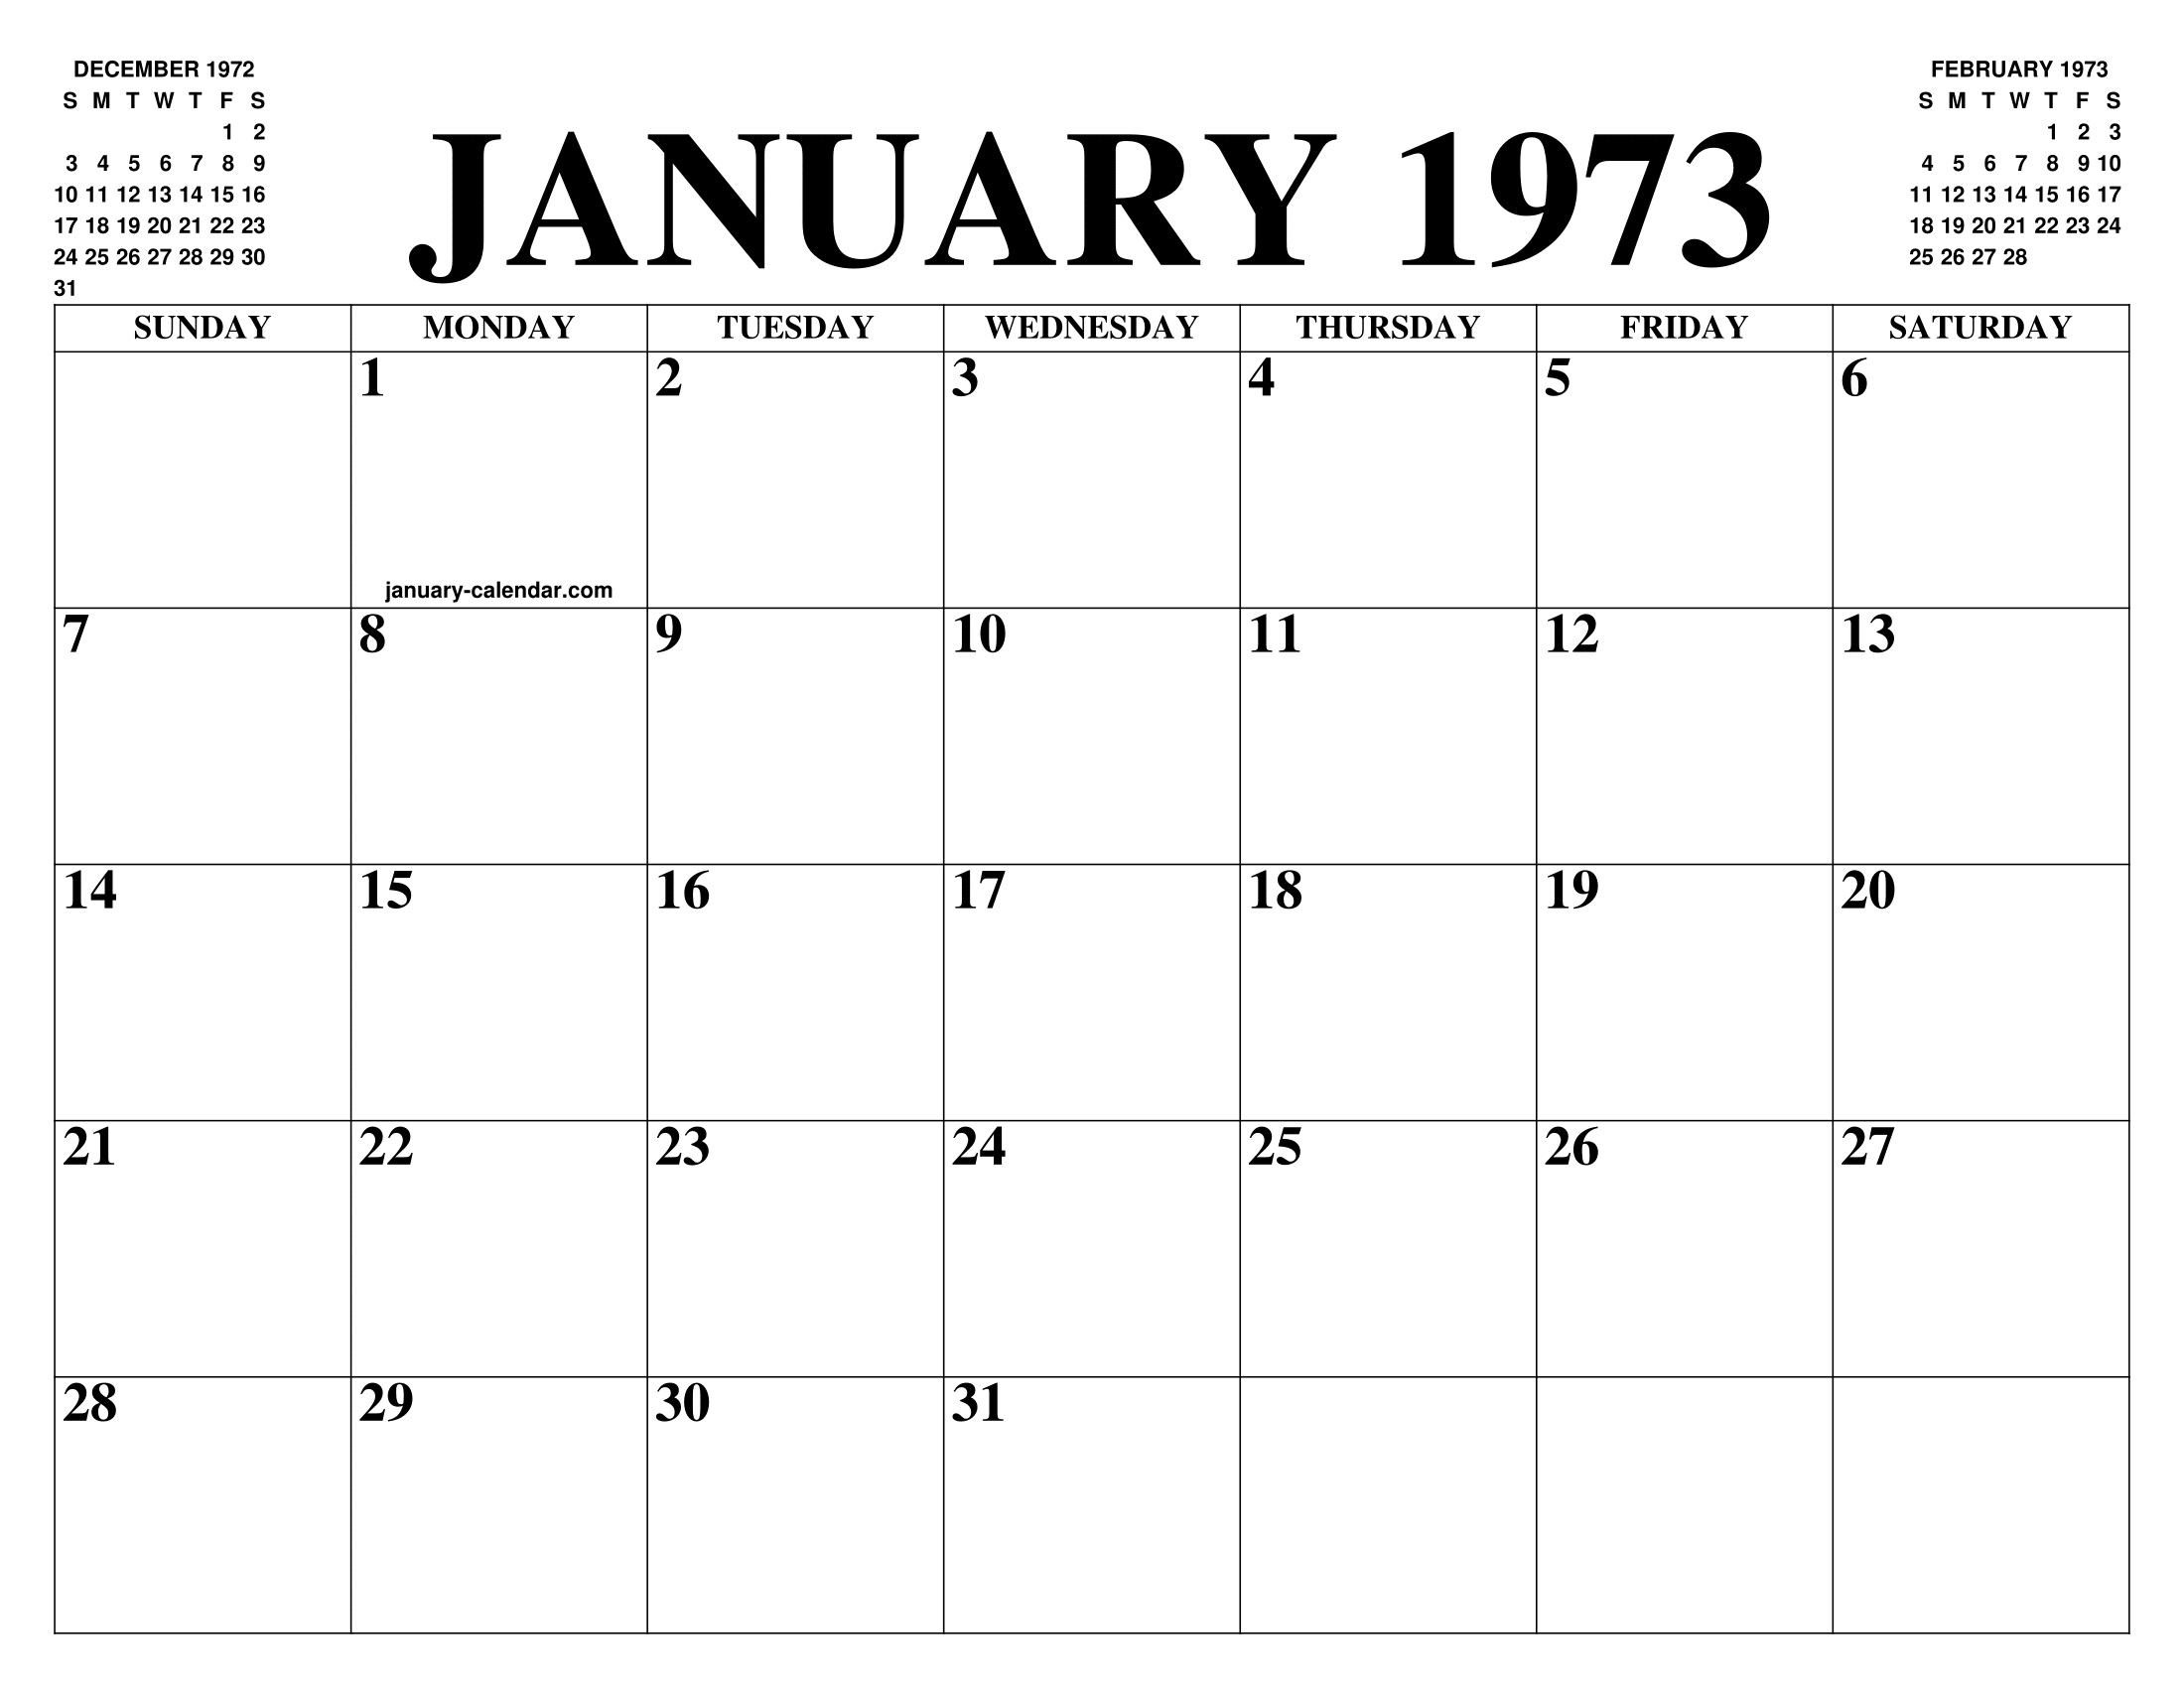 JANUARY 1973 CALENDAR OF THE MONTH: FREE PRINTABLE JANUARY CALENDAR OF